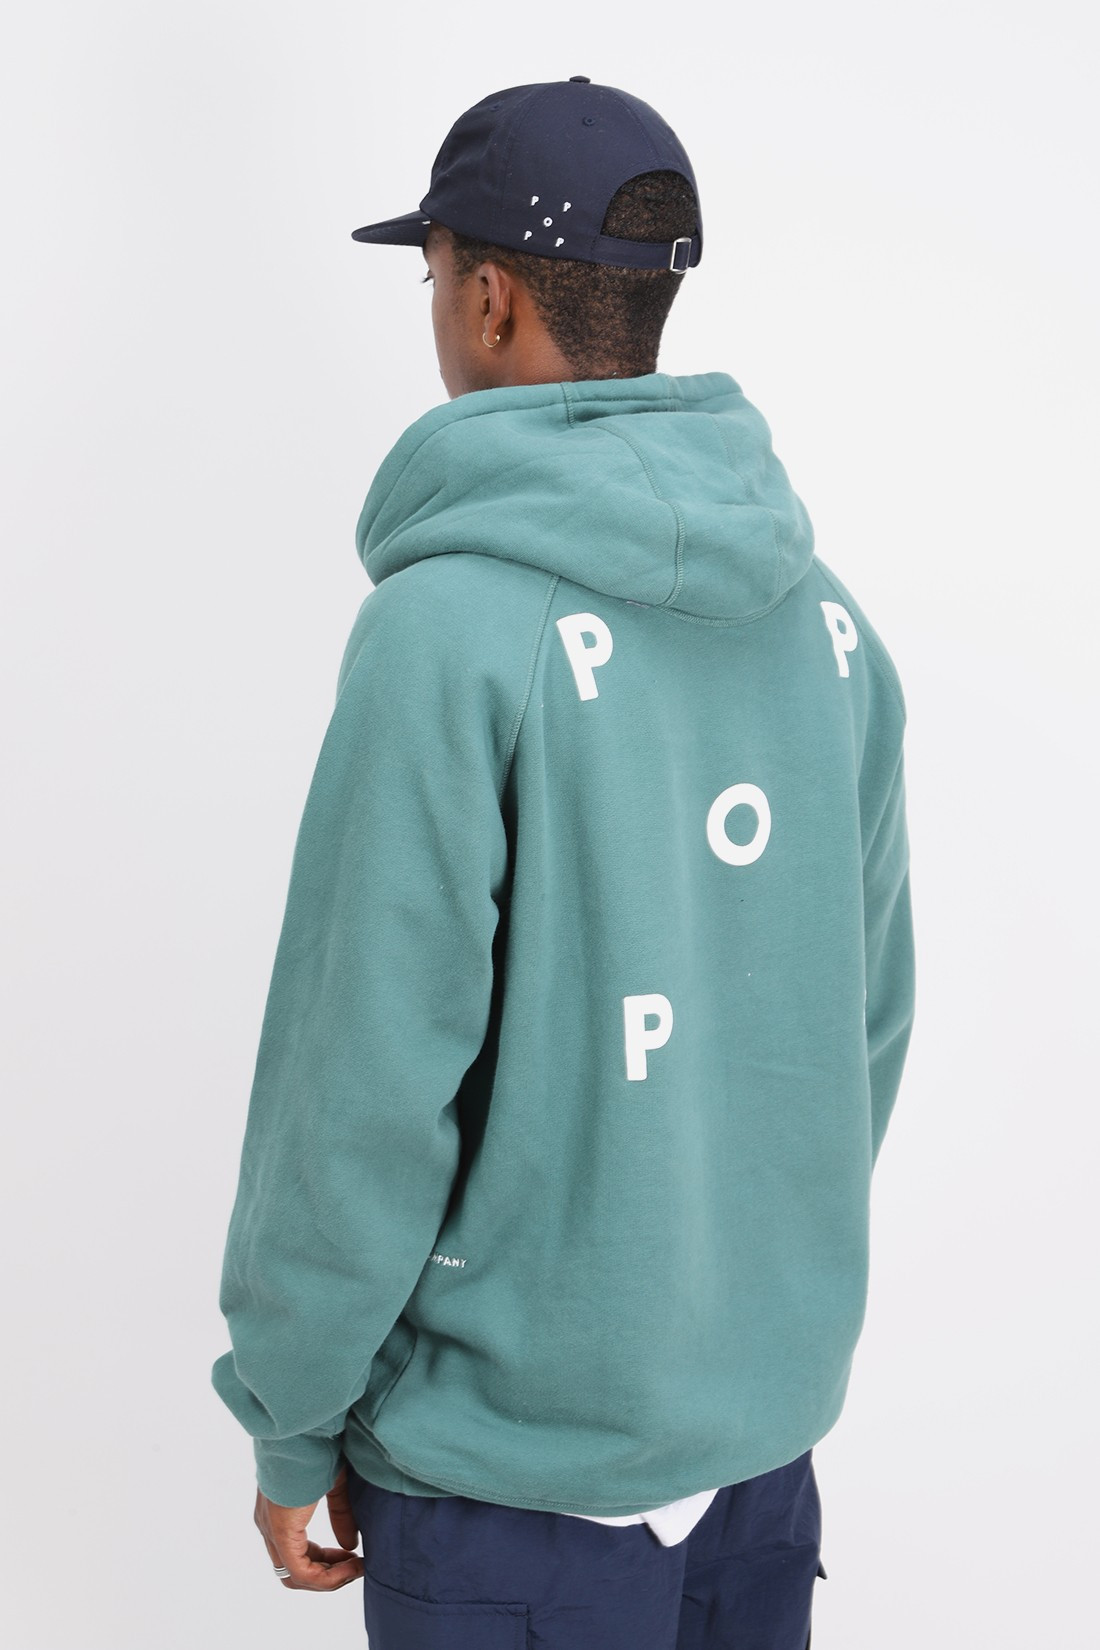 POP TRADING COMPANY / Logo hooded sweat Bistro green